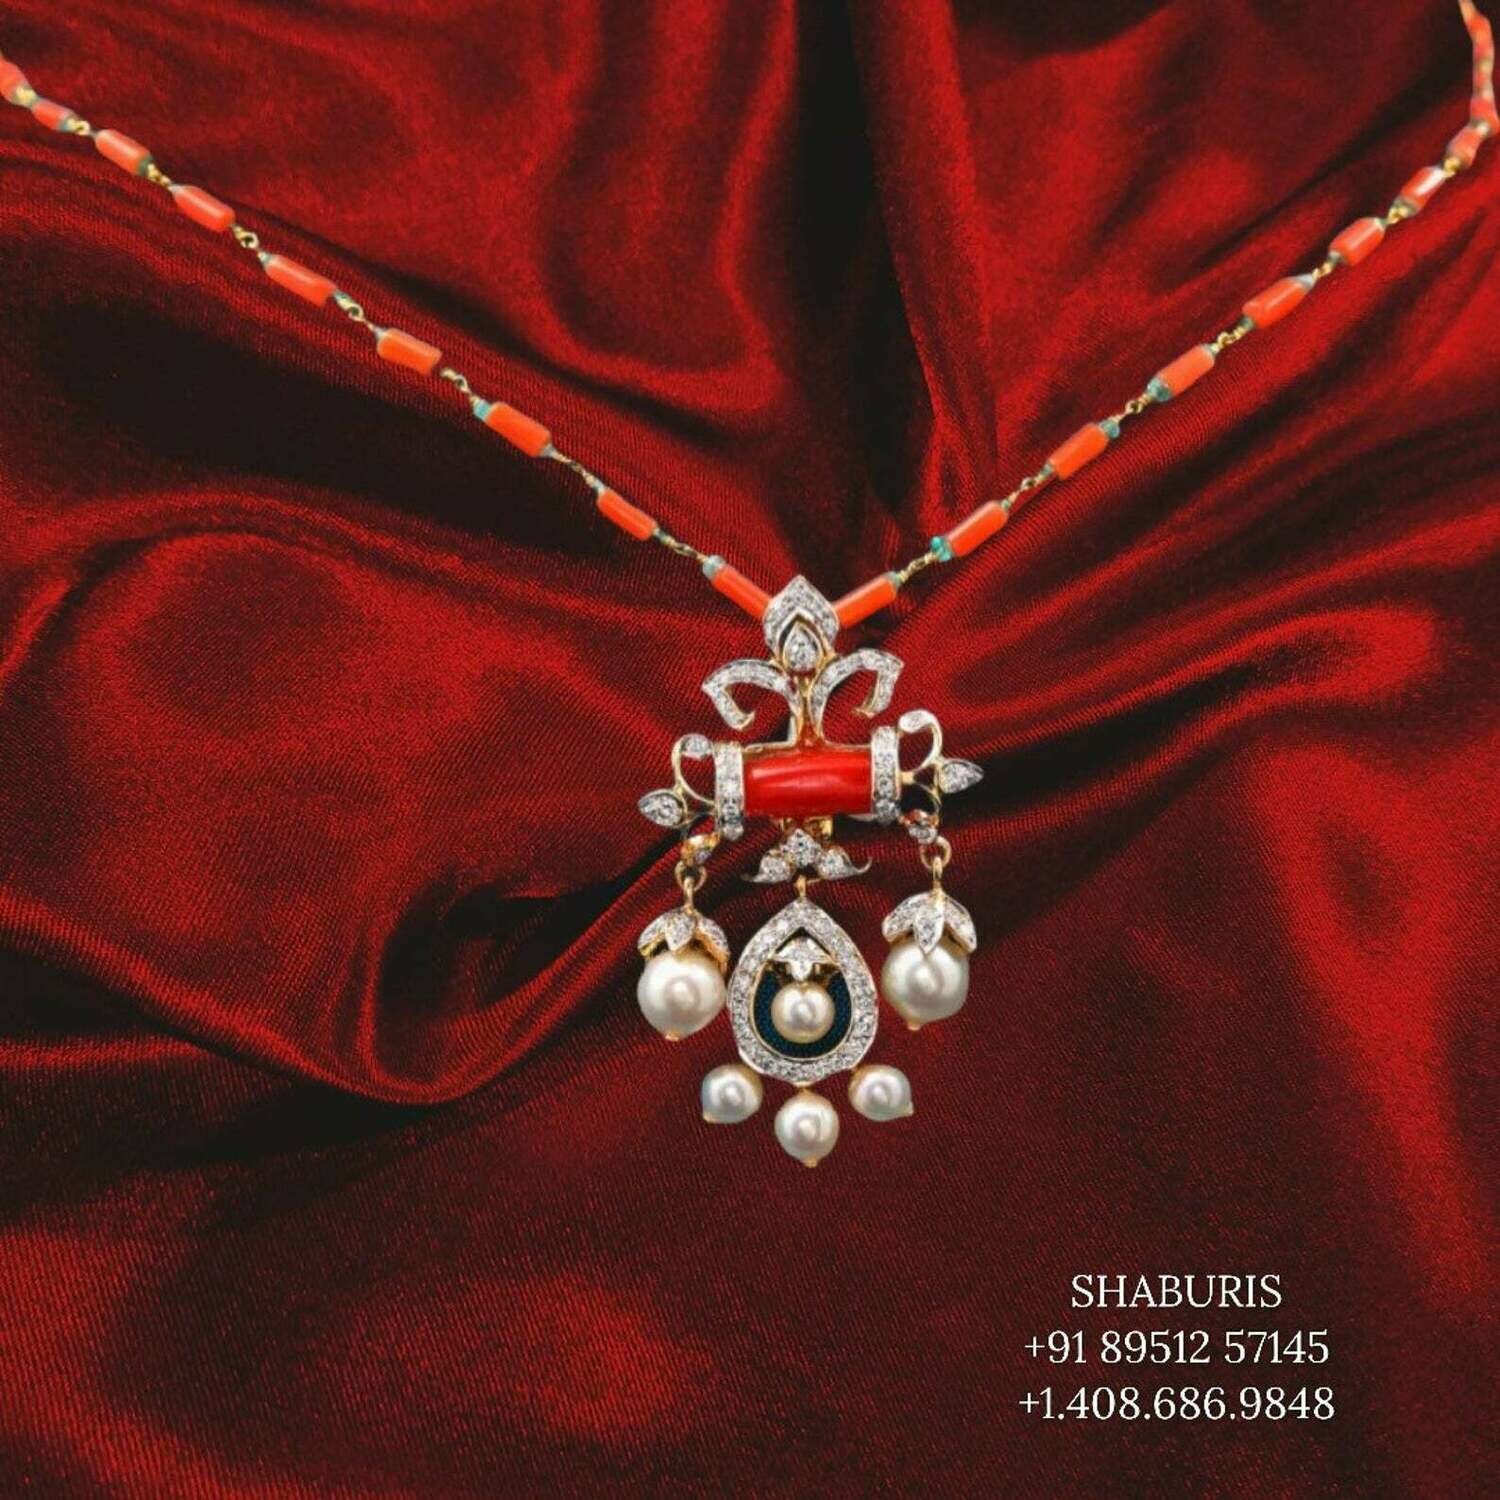 Lyte weight jewelry , coral Jewelry,South Indian Jewelry,Pure silver coral jewelry,Diamomd pendant,Indian Wedding Jewelry -SHABURIS